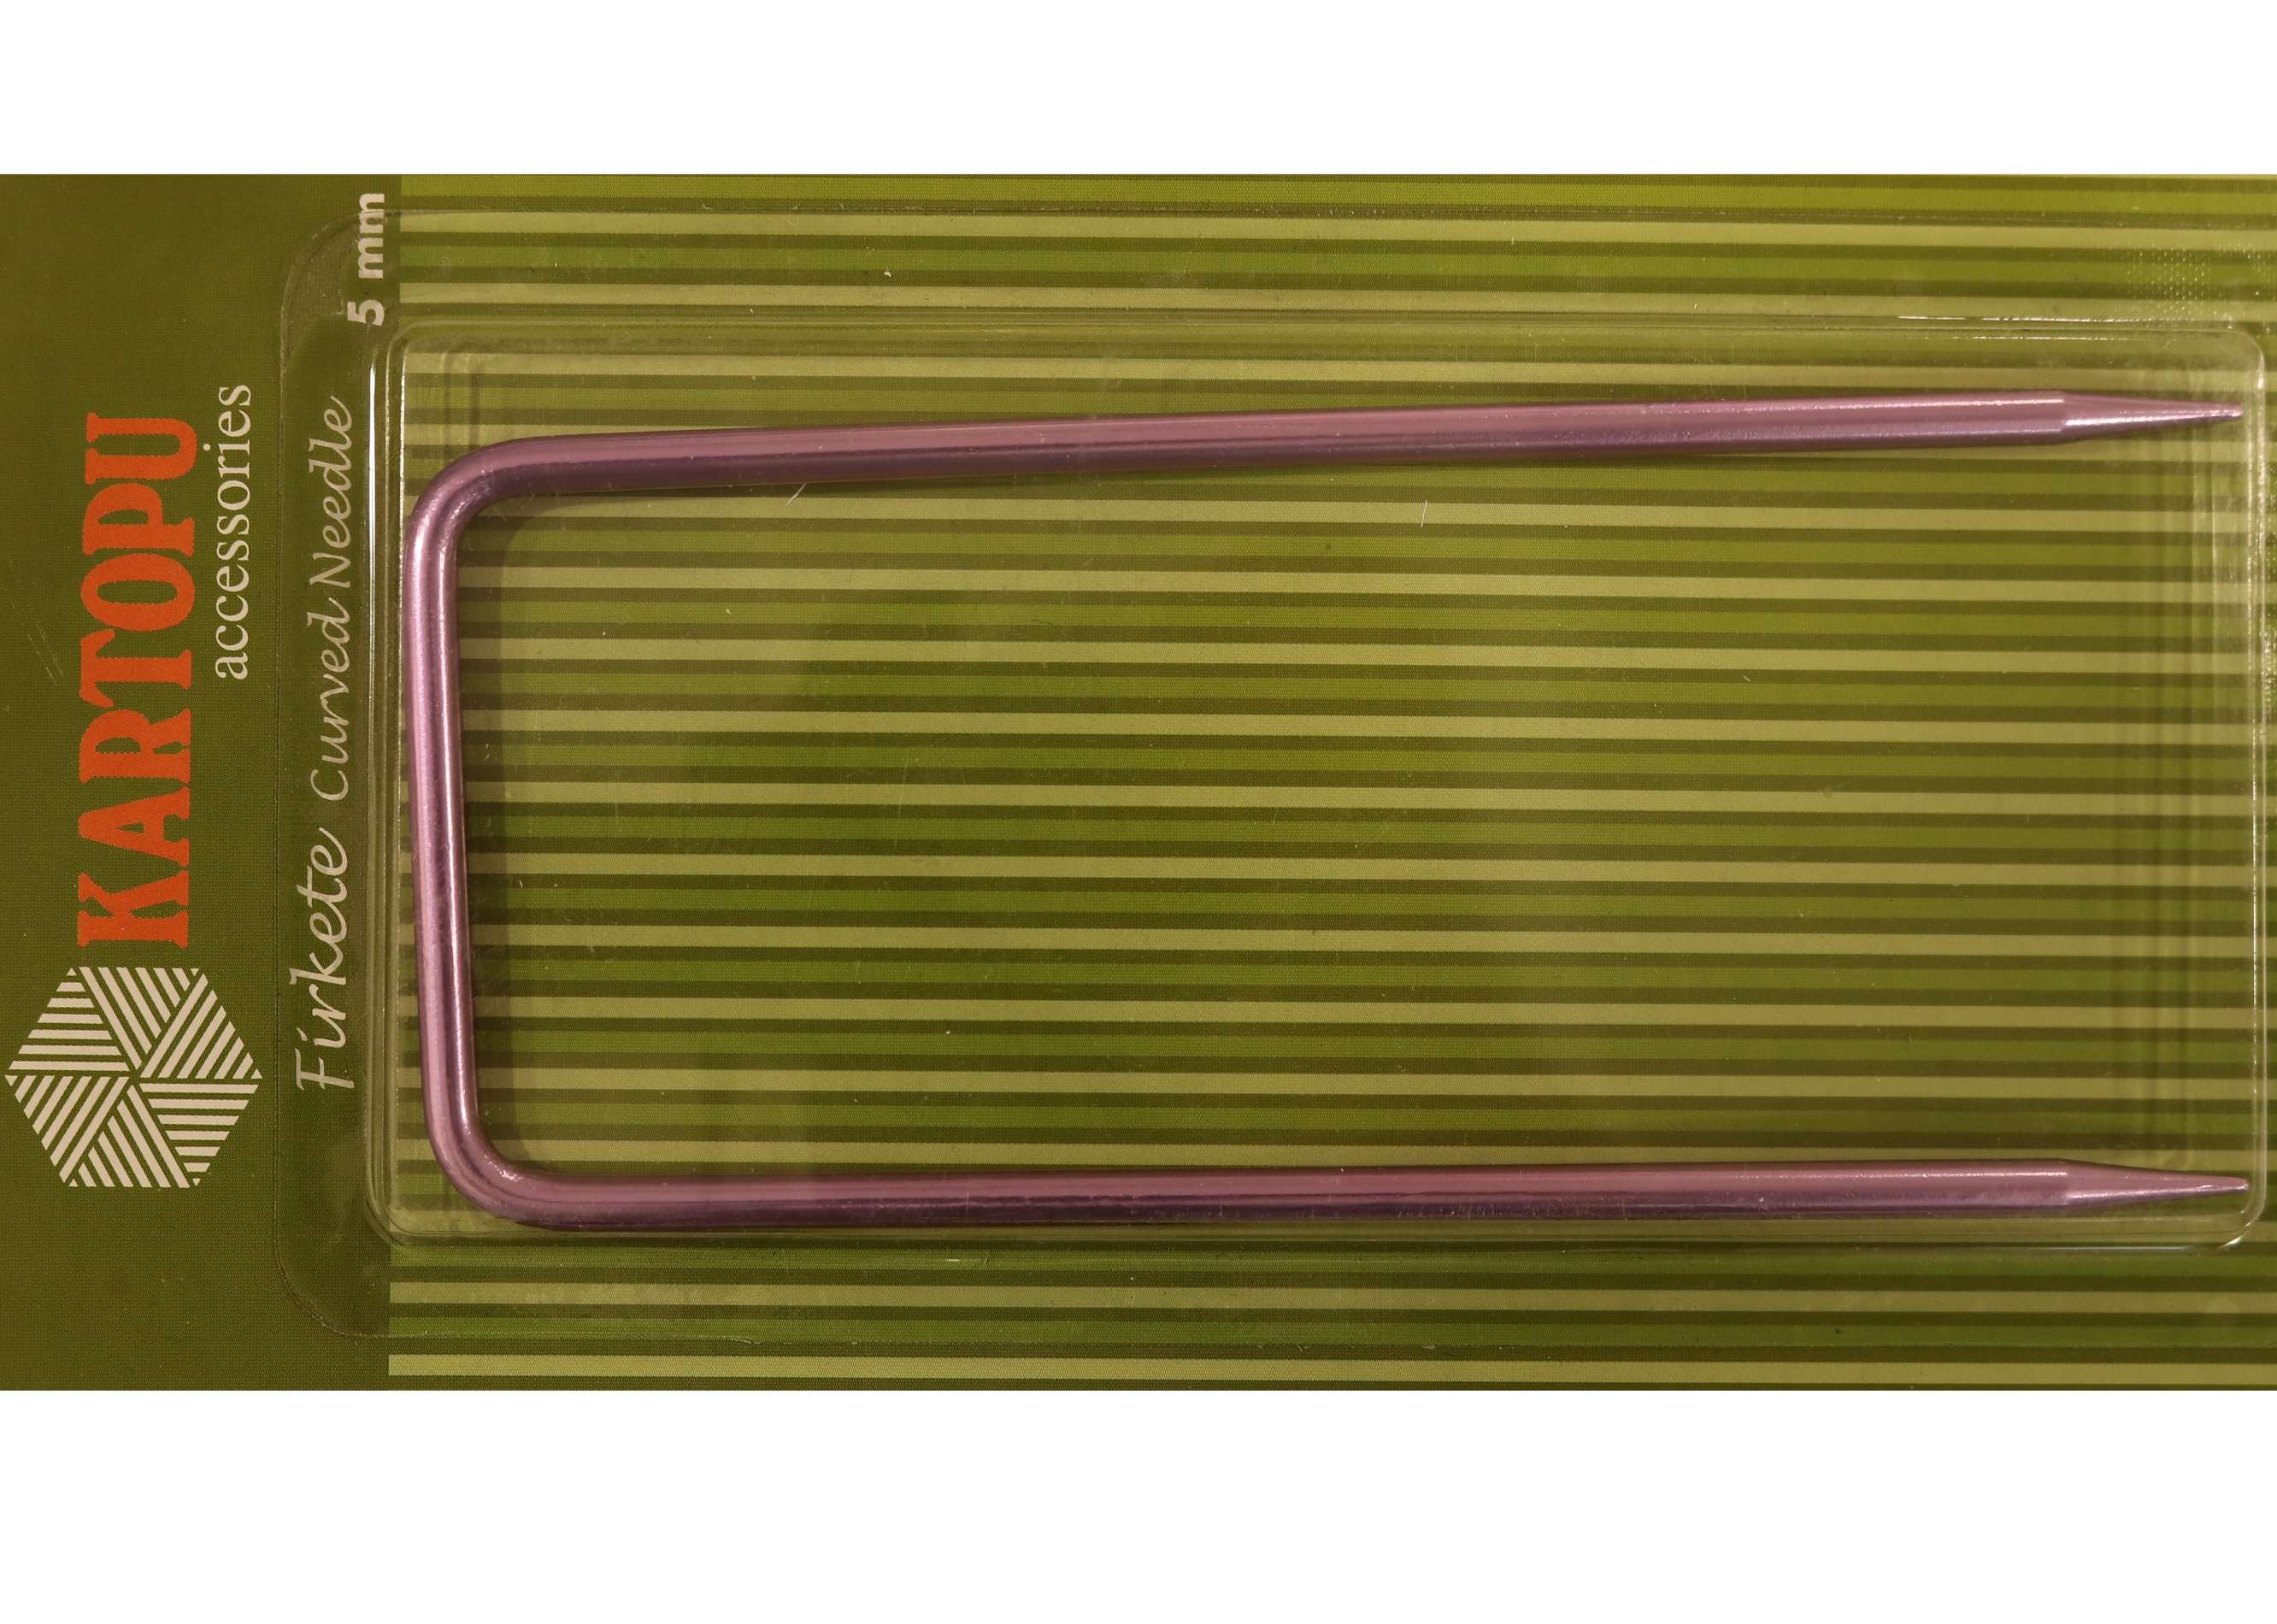 Kartopy Φουρκέτα Πλεξίματος 5mm (15,5x6,5cm)